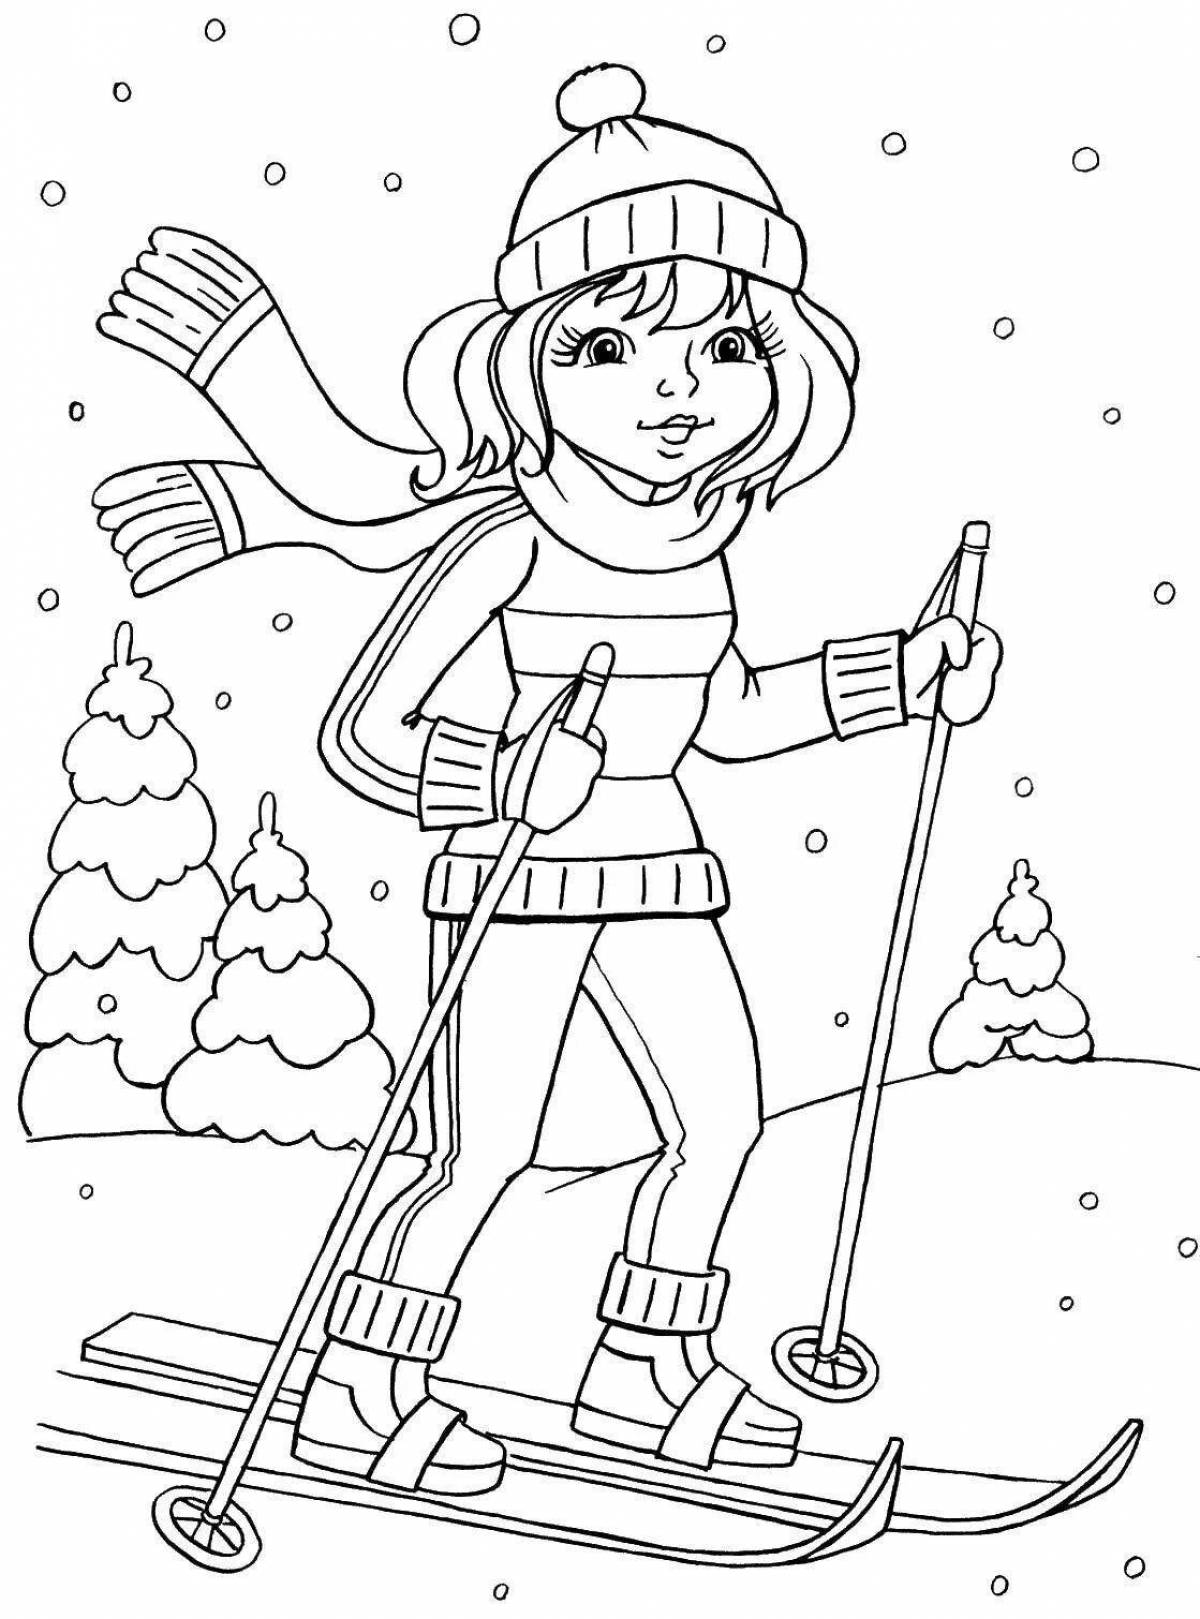 Adorable ski coloring book for kids